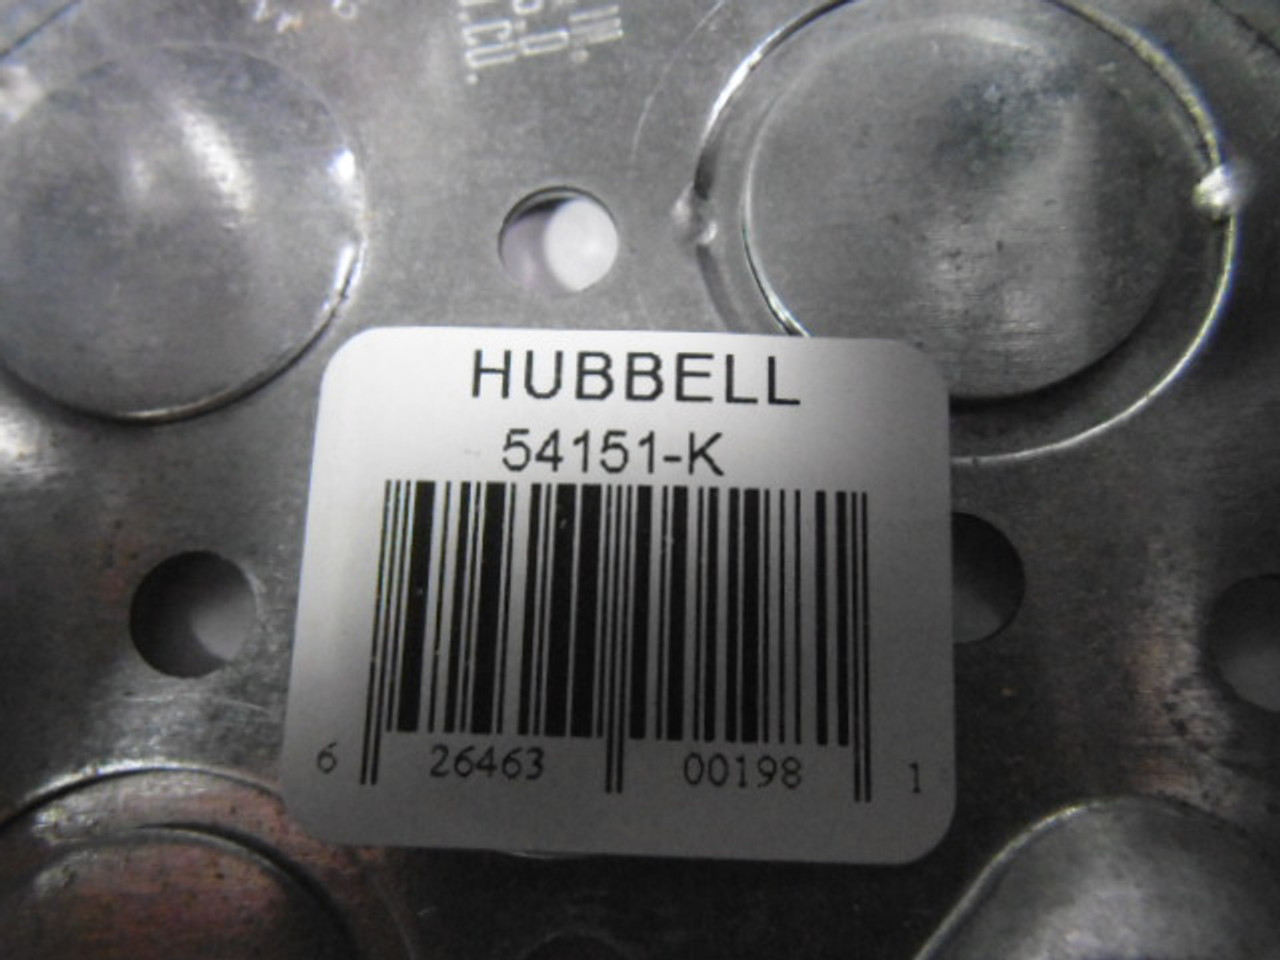 Hubbell 54151-K Octagonal Conduit Box 1-1/2x4x4" 8 Knockouts NOP